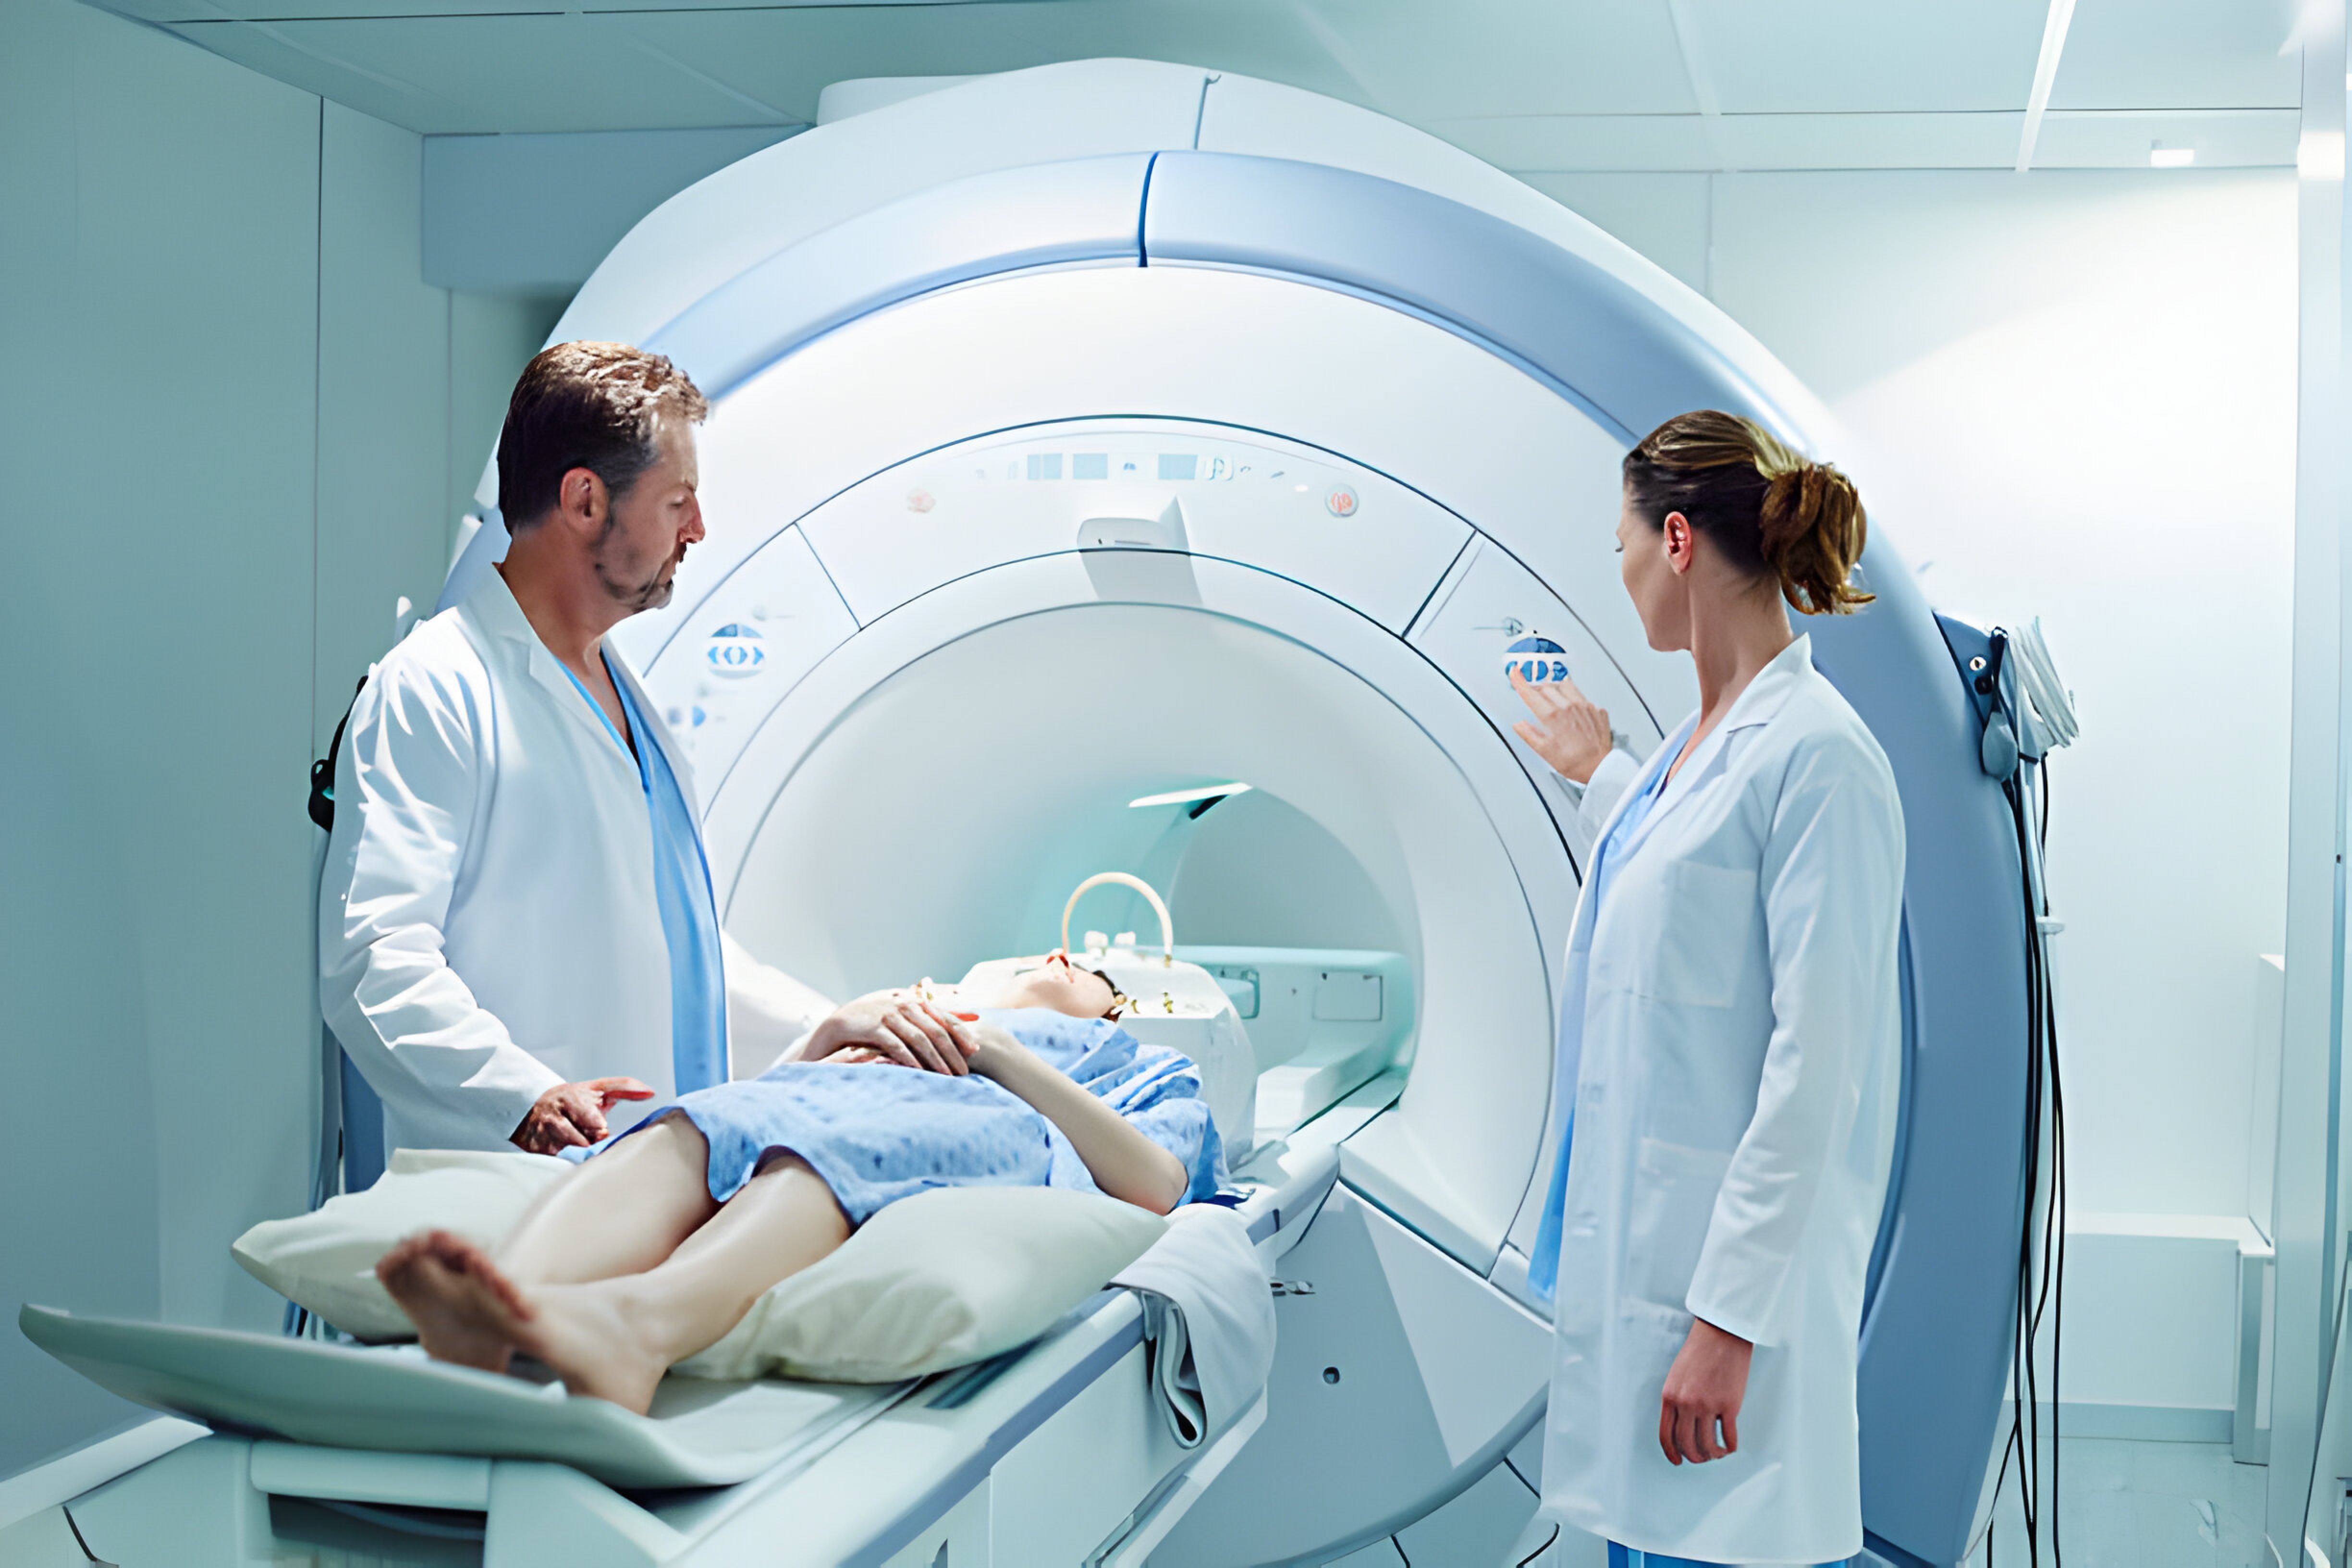 What Type of Injuries Do MRI Diagnose?